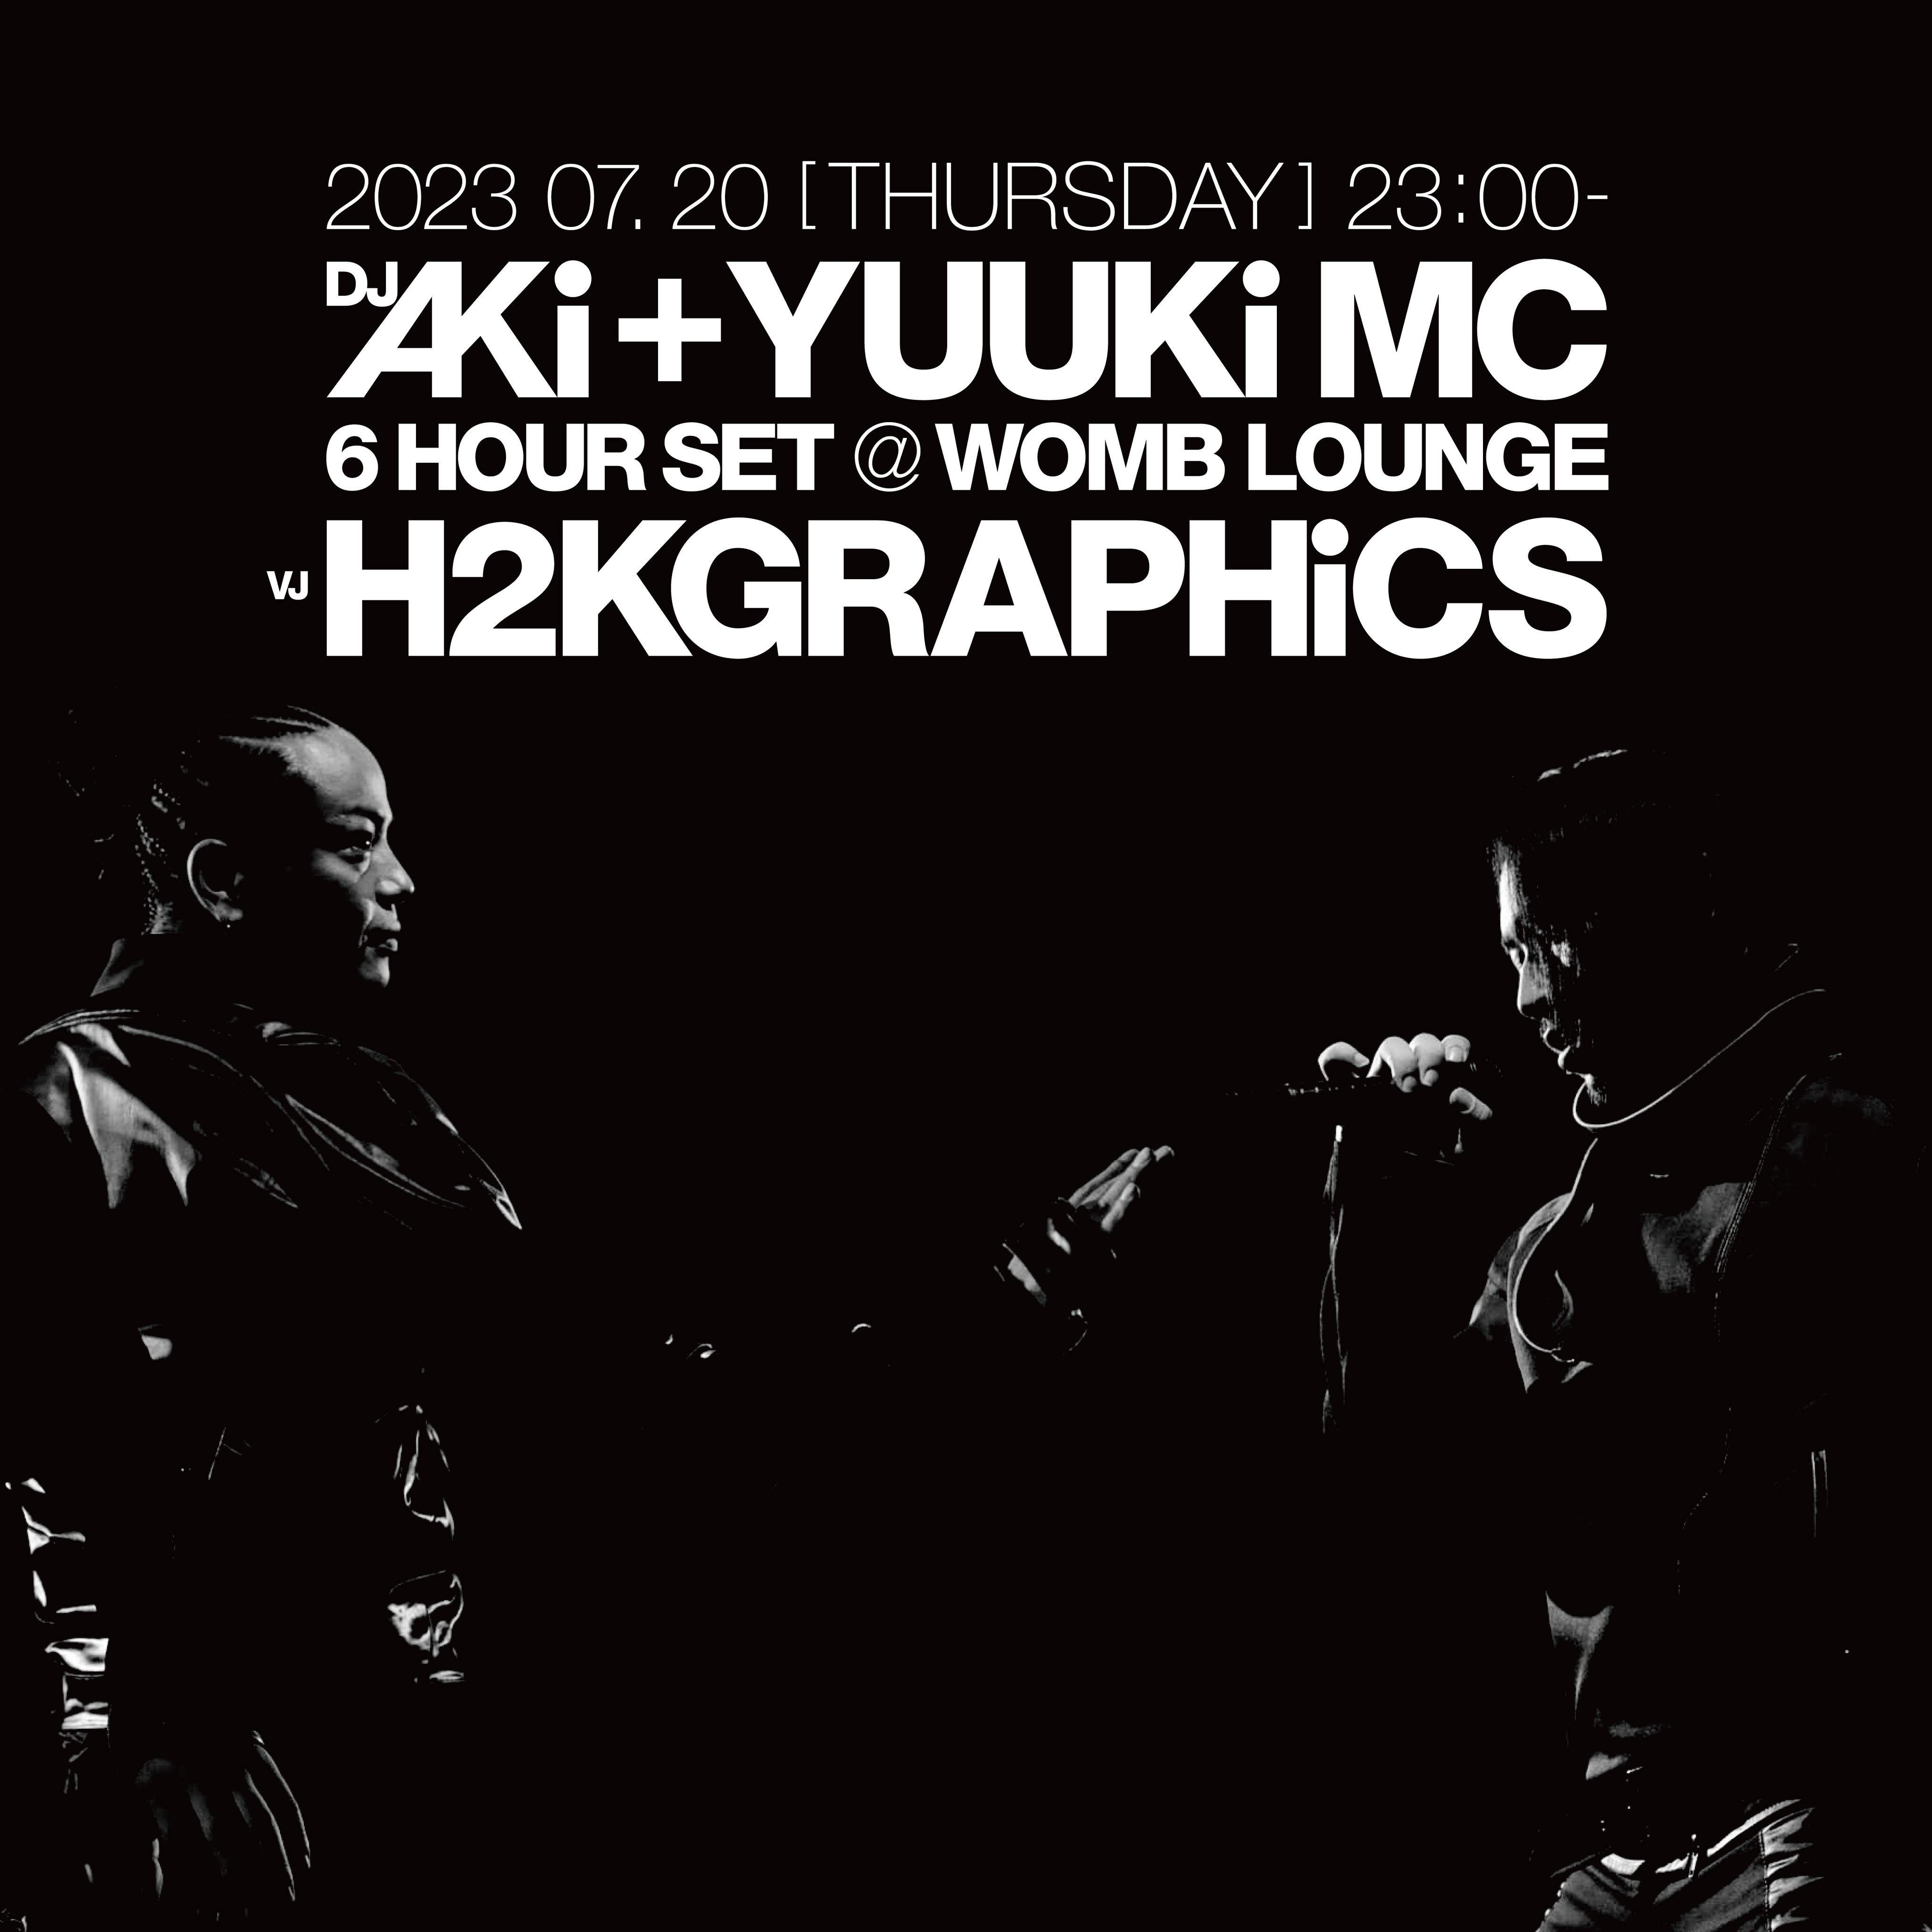 DJ AKi + YUUKi MC 6HOURS SET - フライヤー表